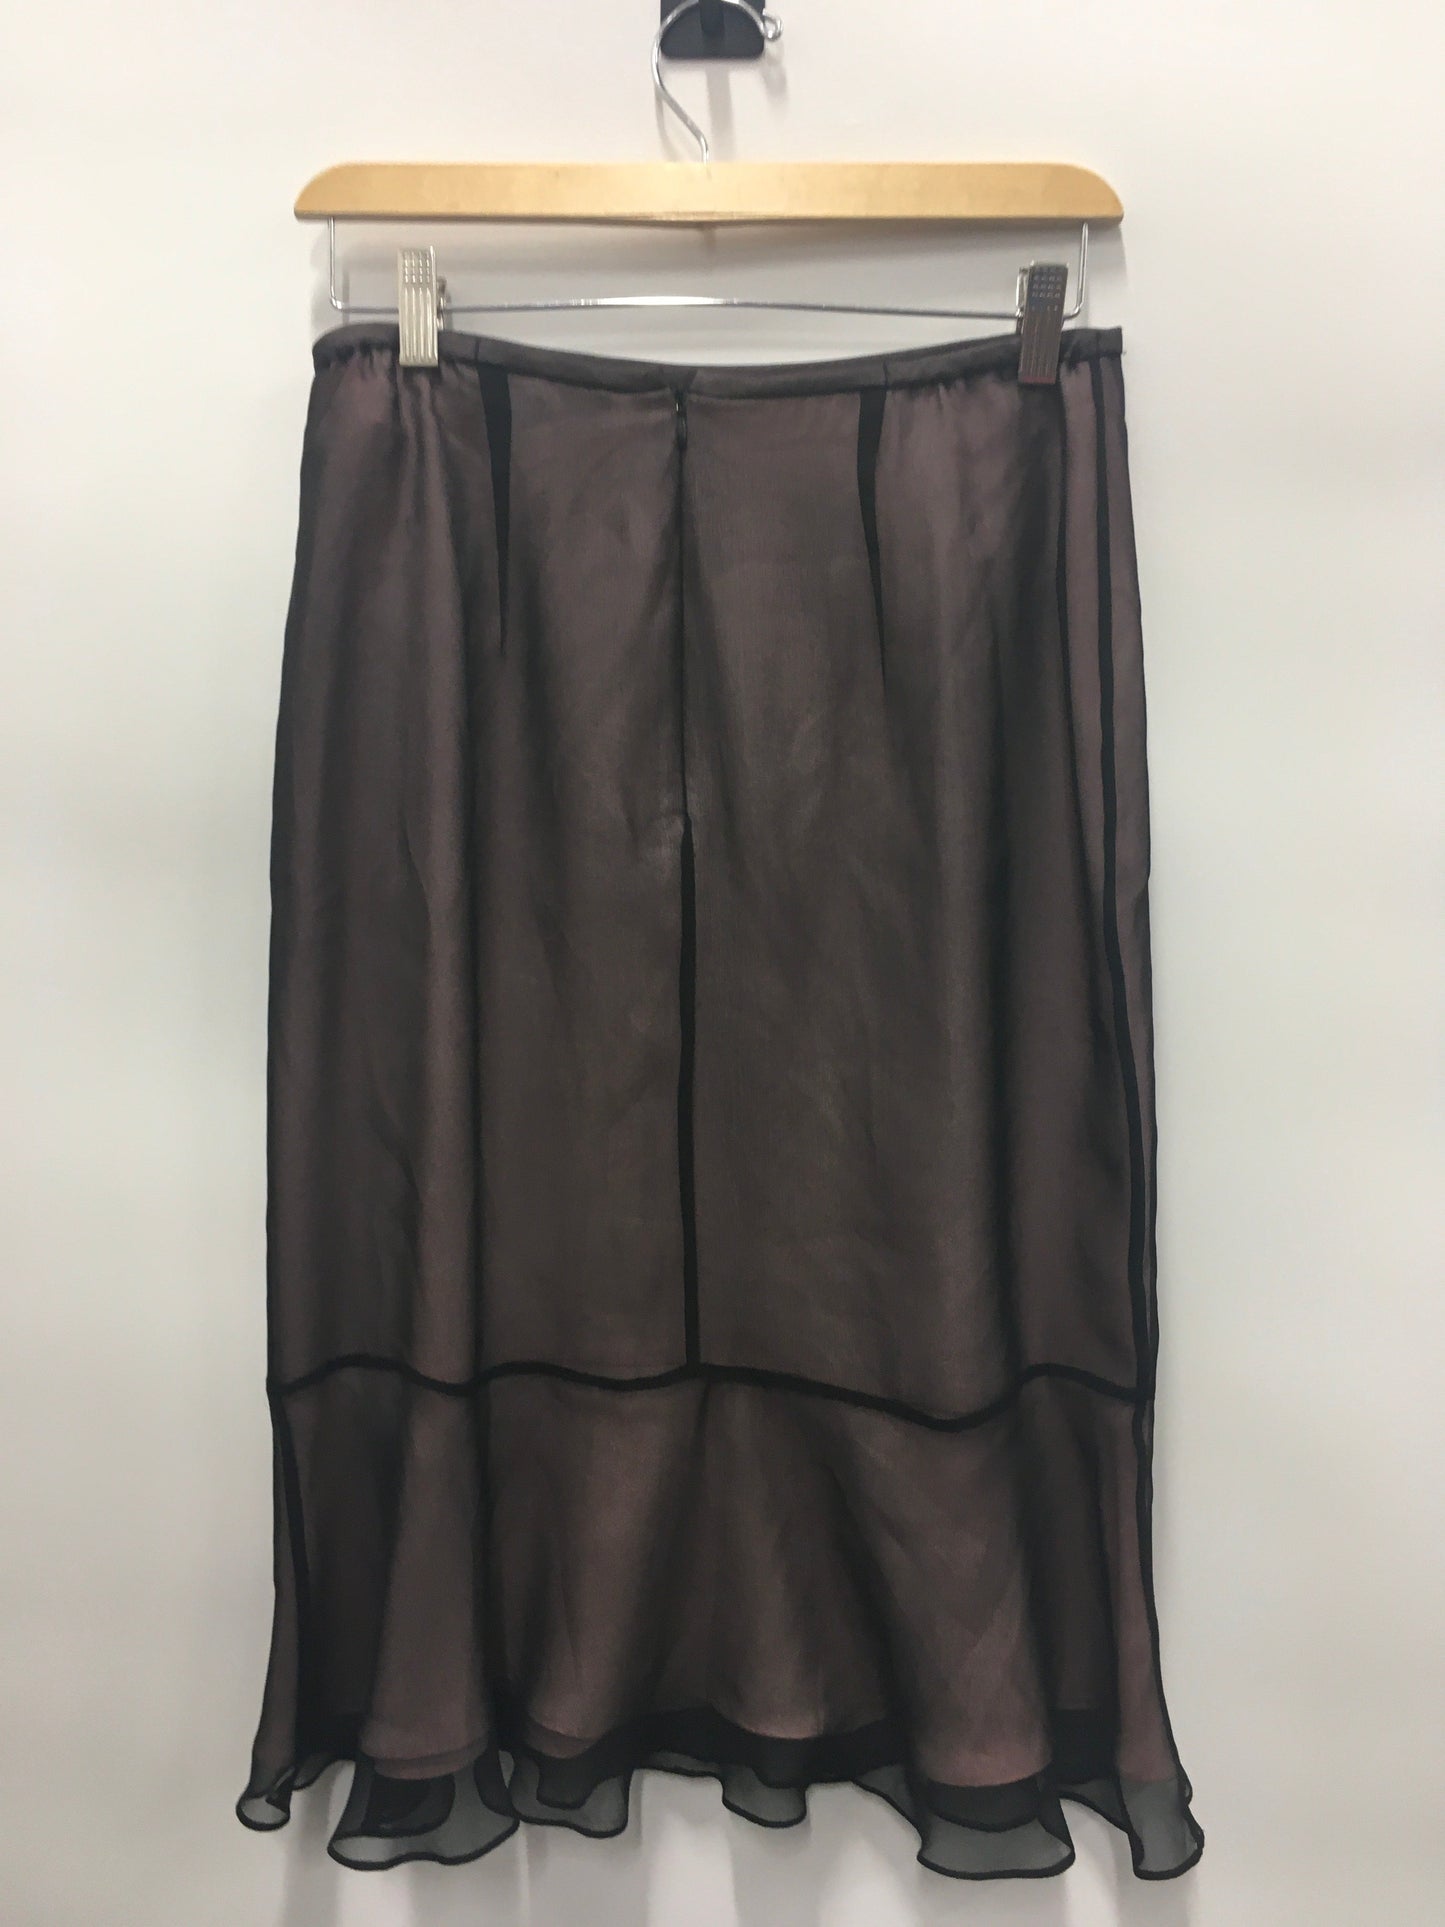 Pinkblack Skirt Midi Adrianna Papell, Size 6